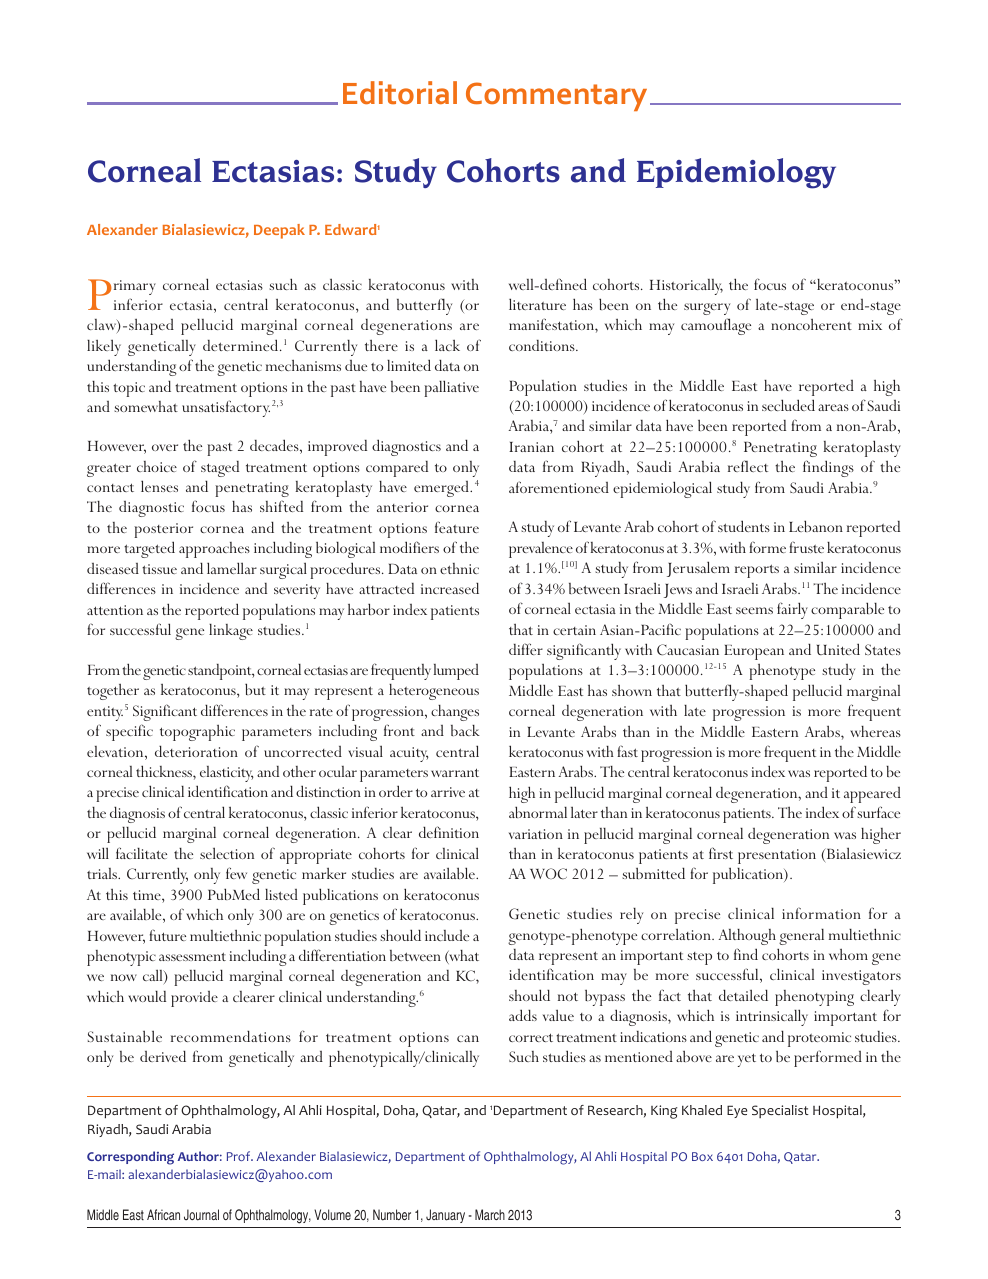 Corneal ectasias: Study cohorts and epidemiology – topic of